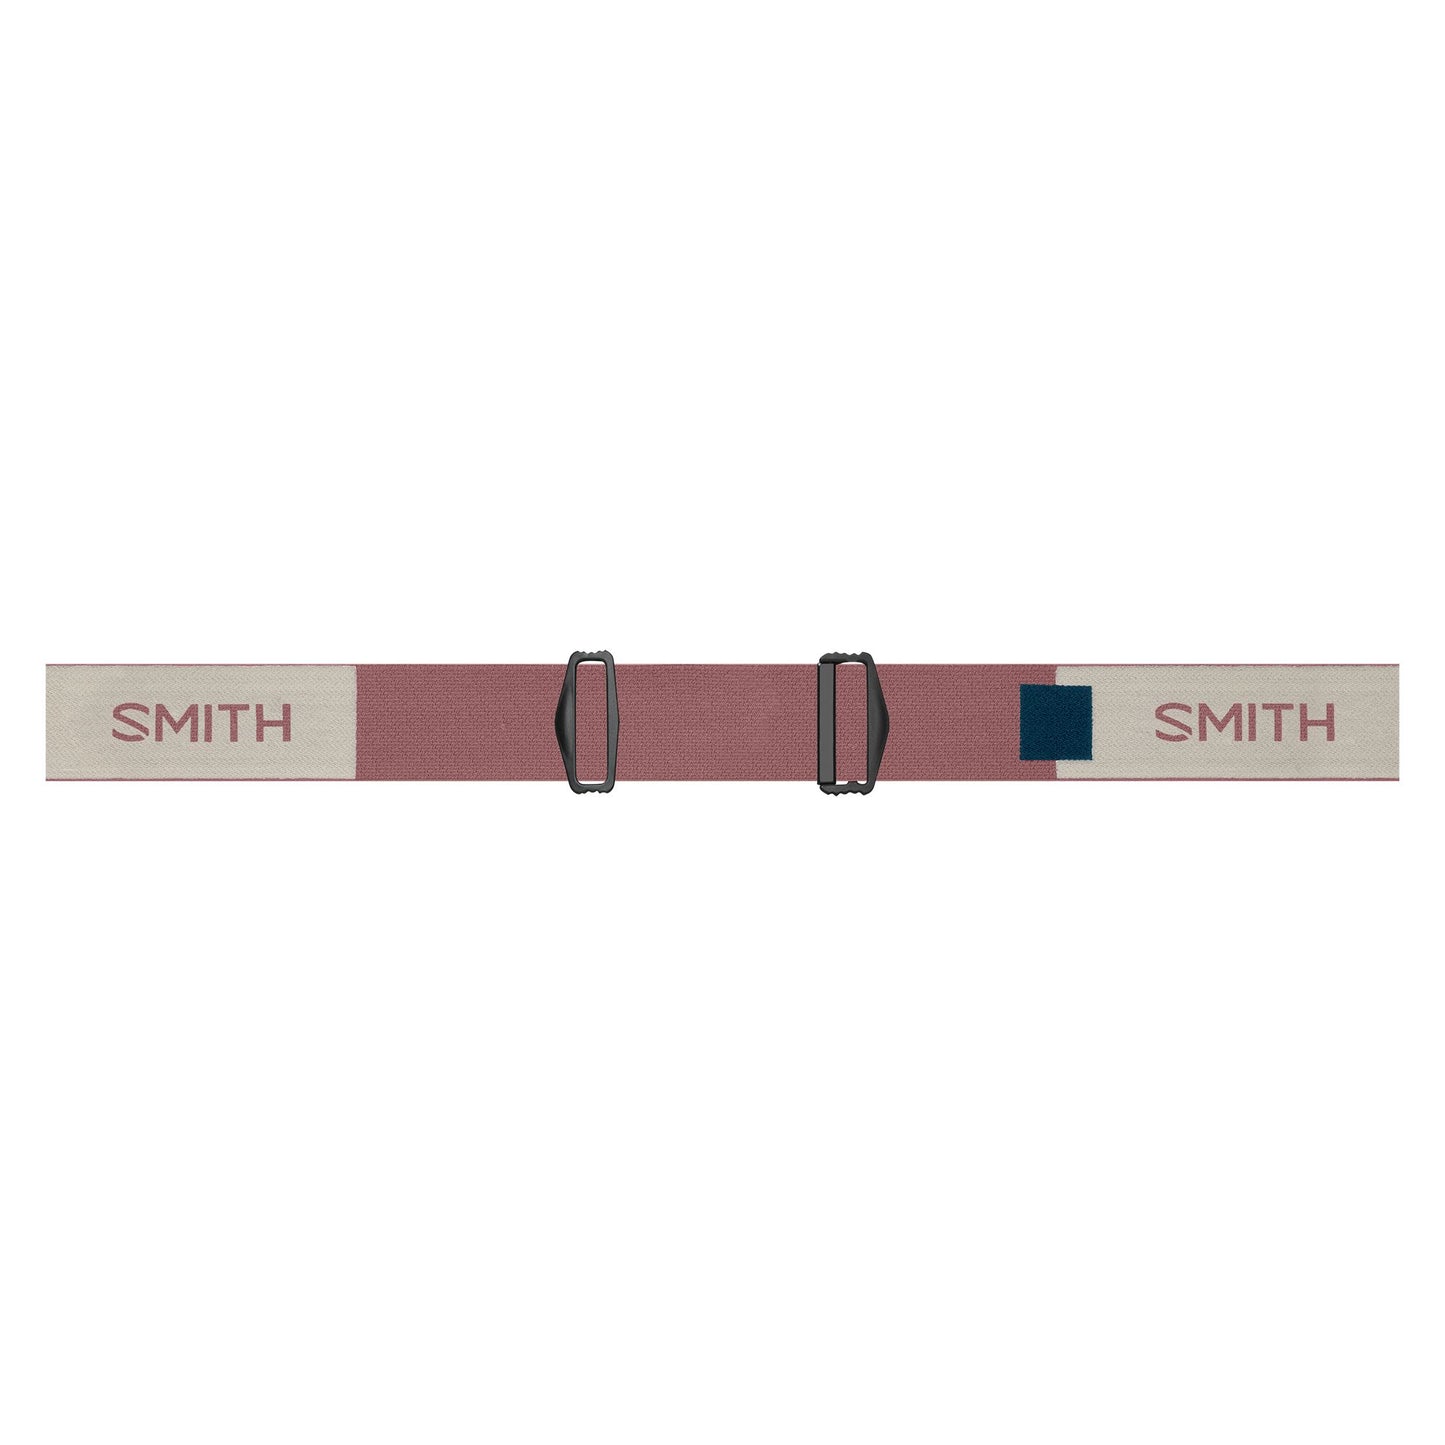 Smith Rhythm Goggles - One Size Fits Most - Dusk - Bone - ChromaPop Sun Black